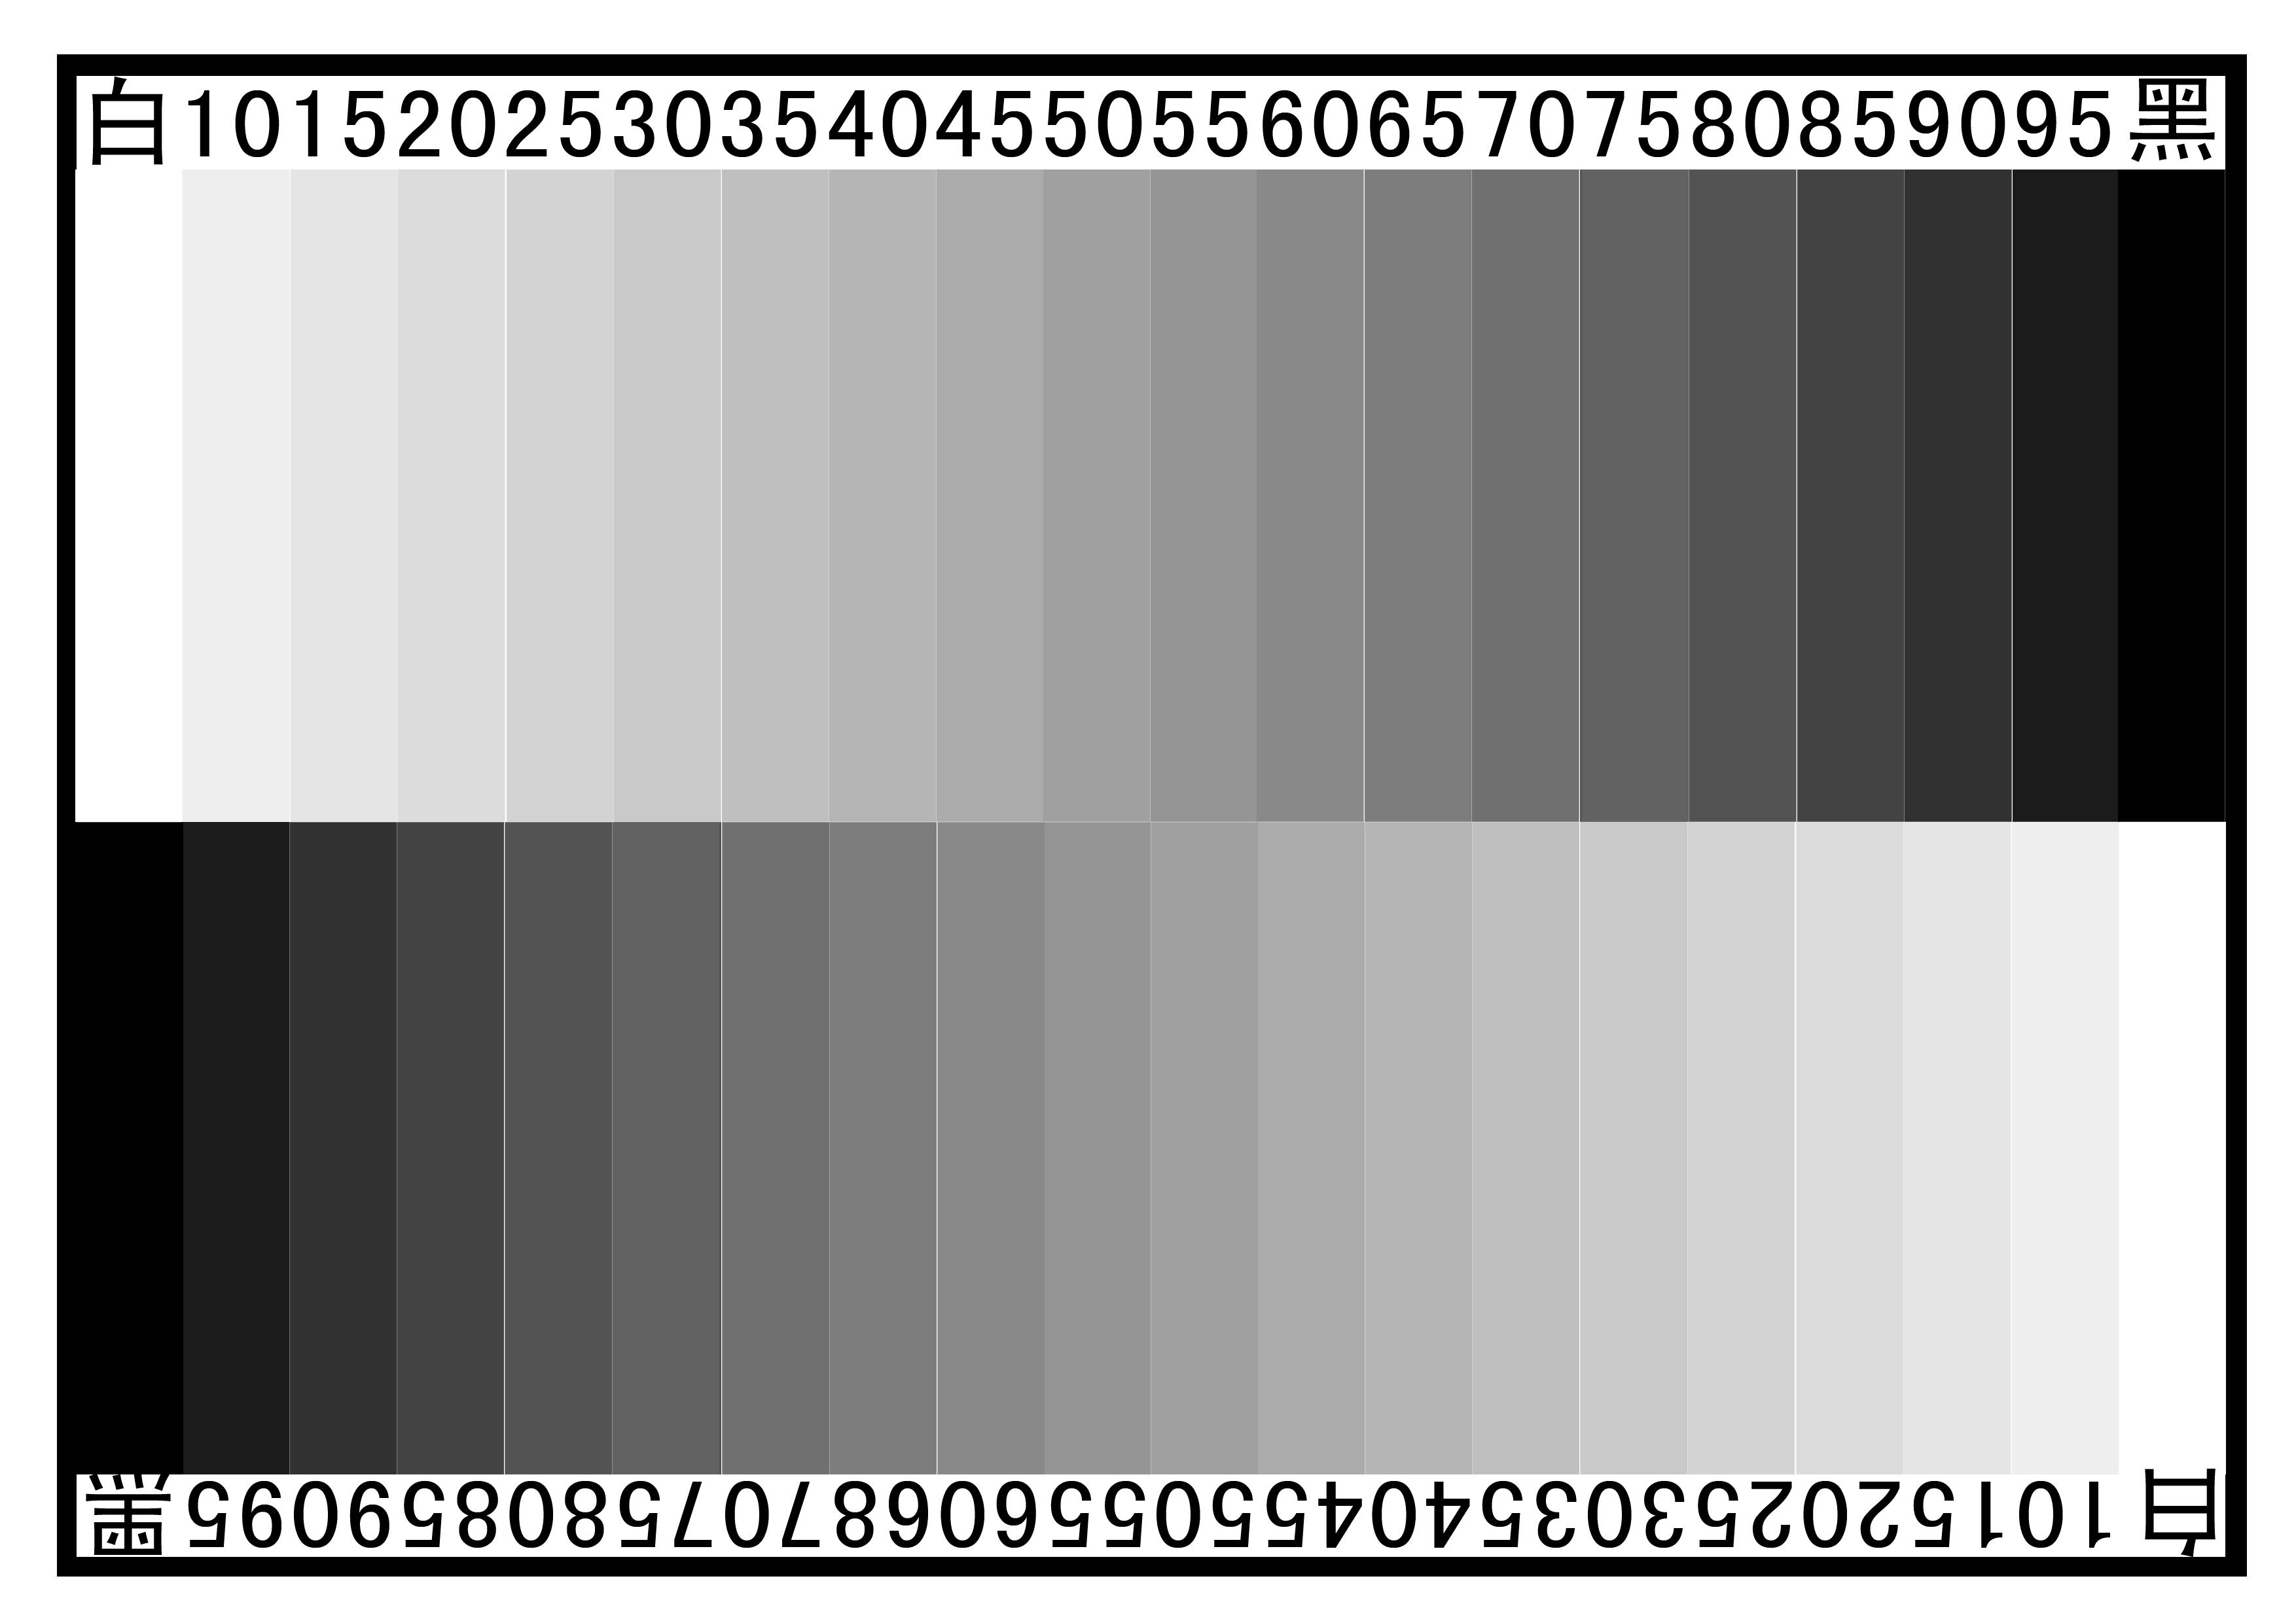 FPGA基本图像处理（灰度图、二值化） - 知乎